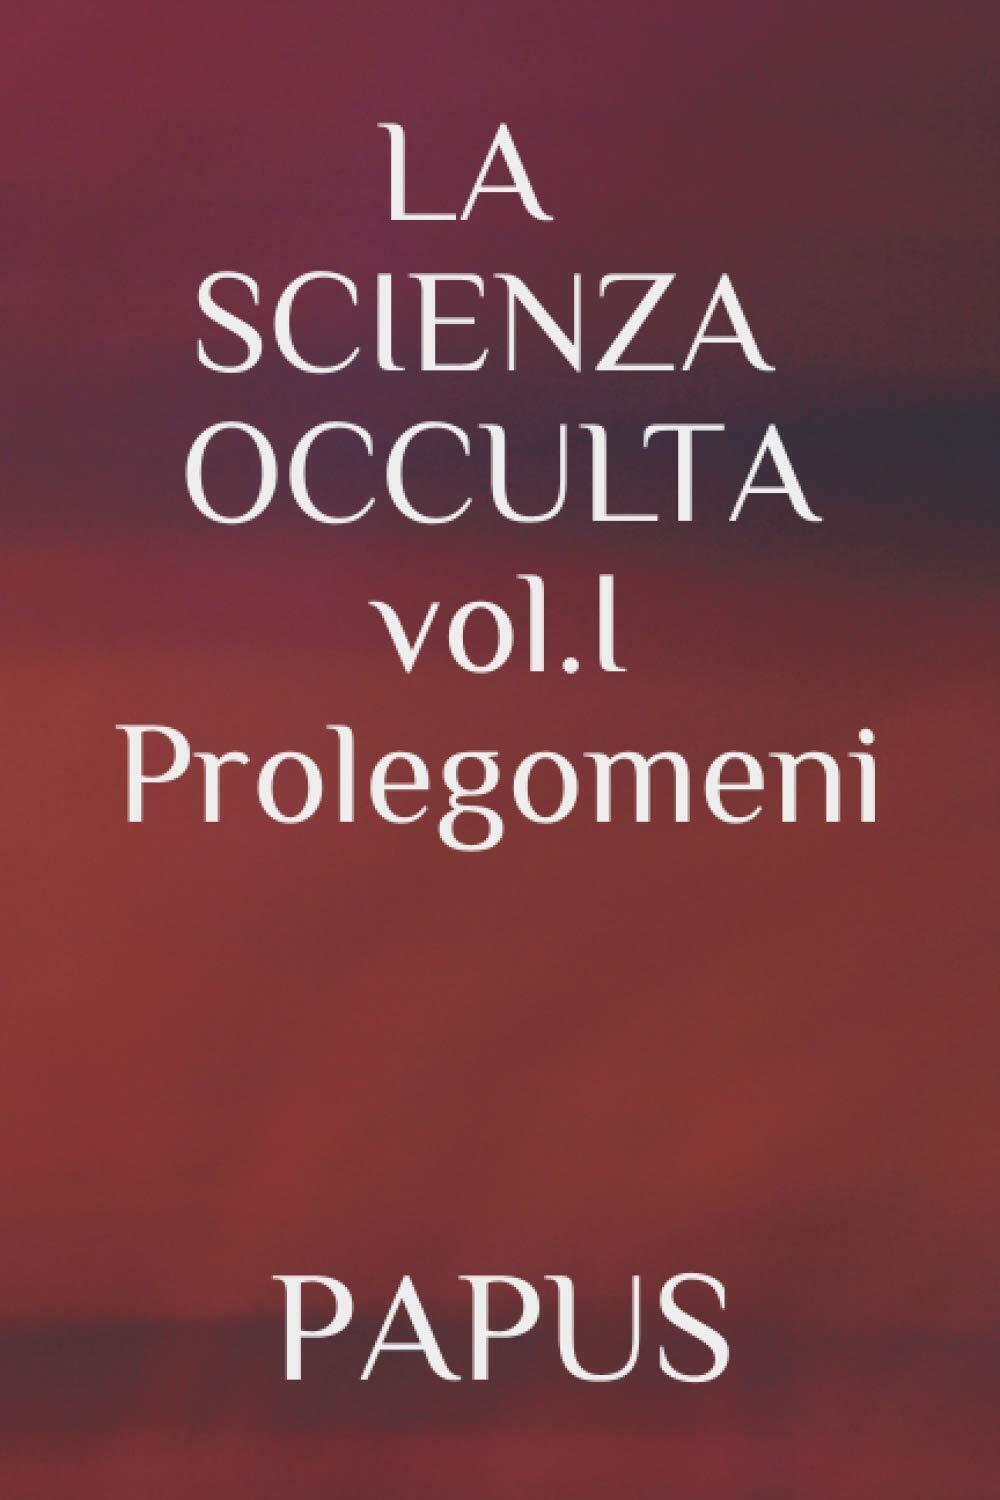 LA SCIENZA OCCULTA: vol. I Prolegomeni - PAPUS - ?Independently published, 2020